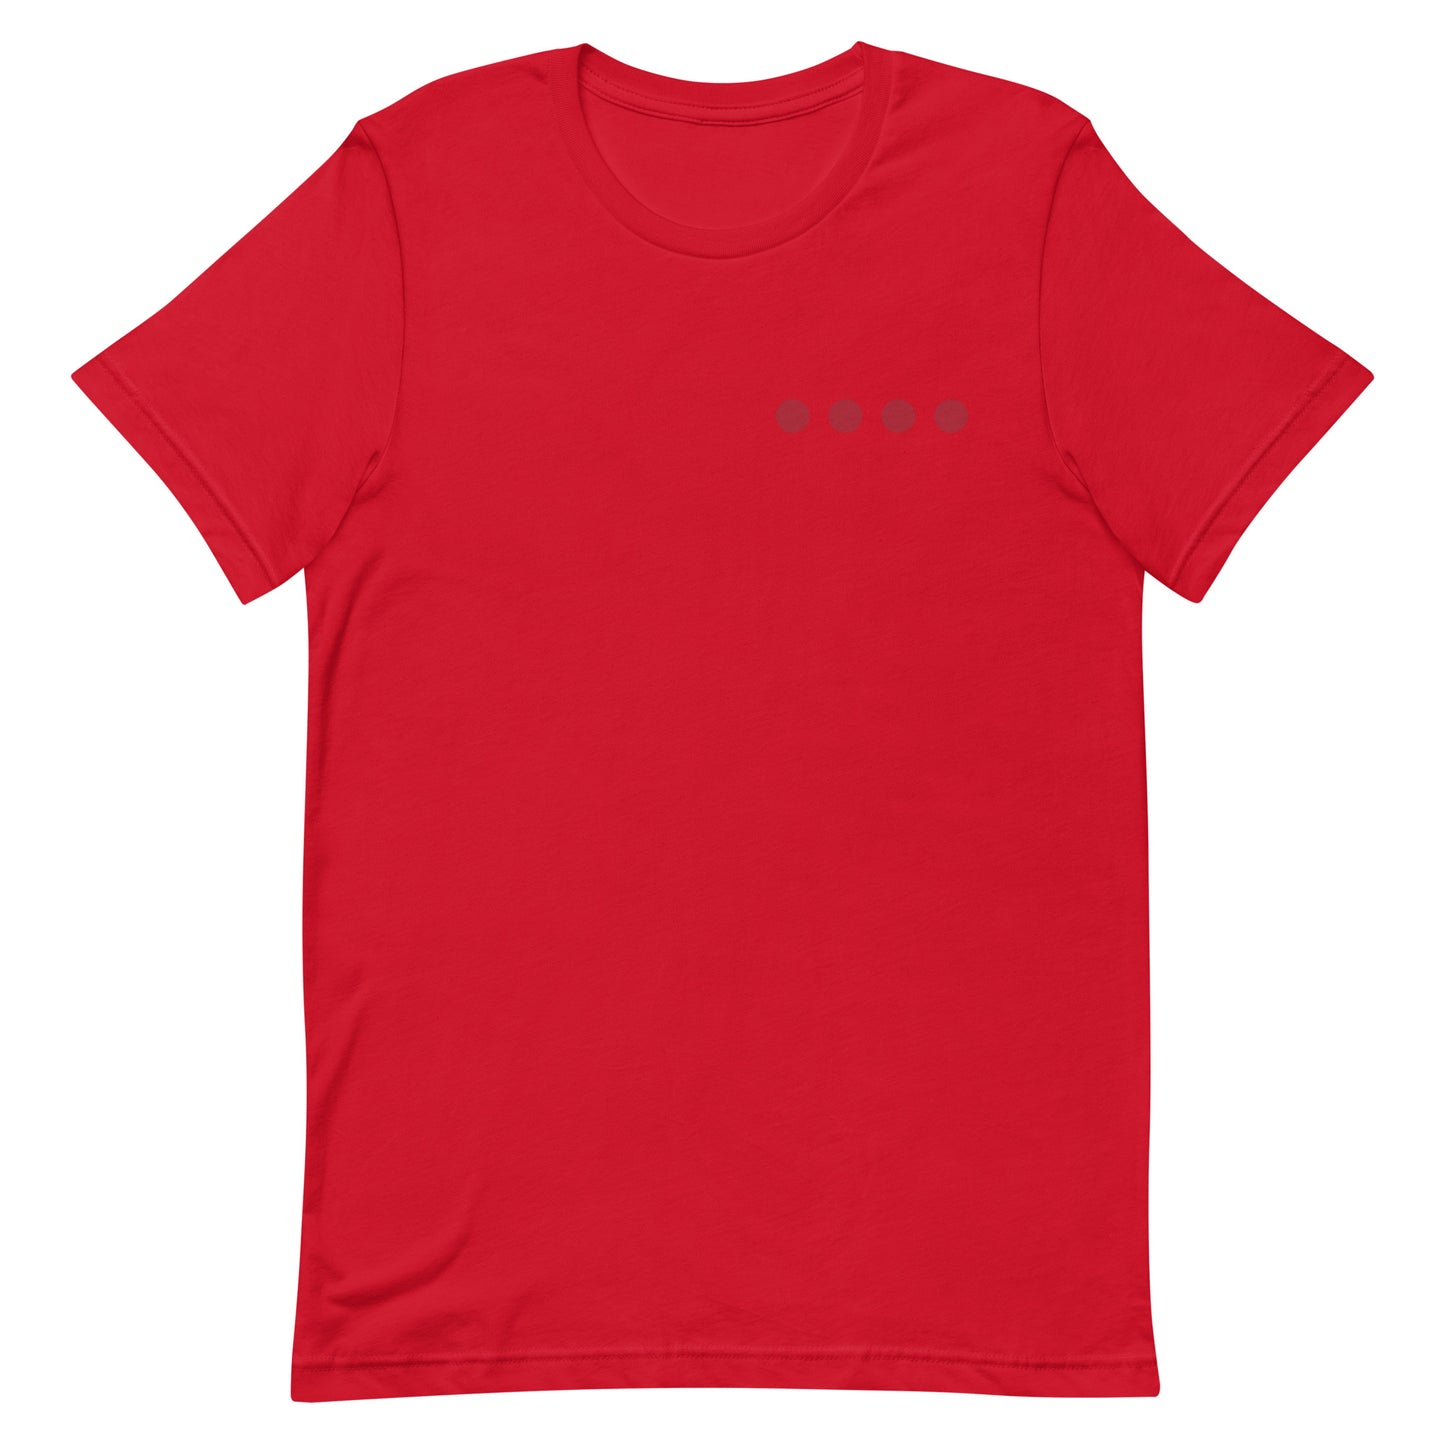 Clone T-shirt - Fordo